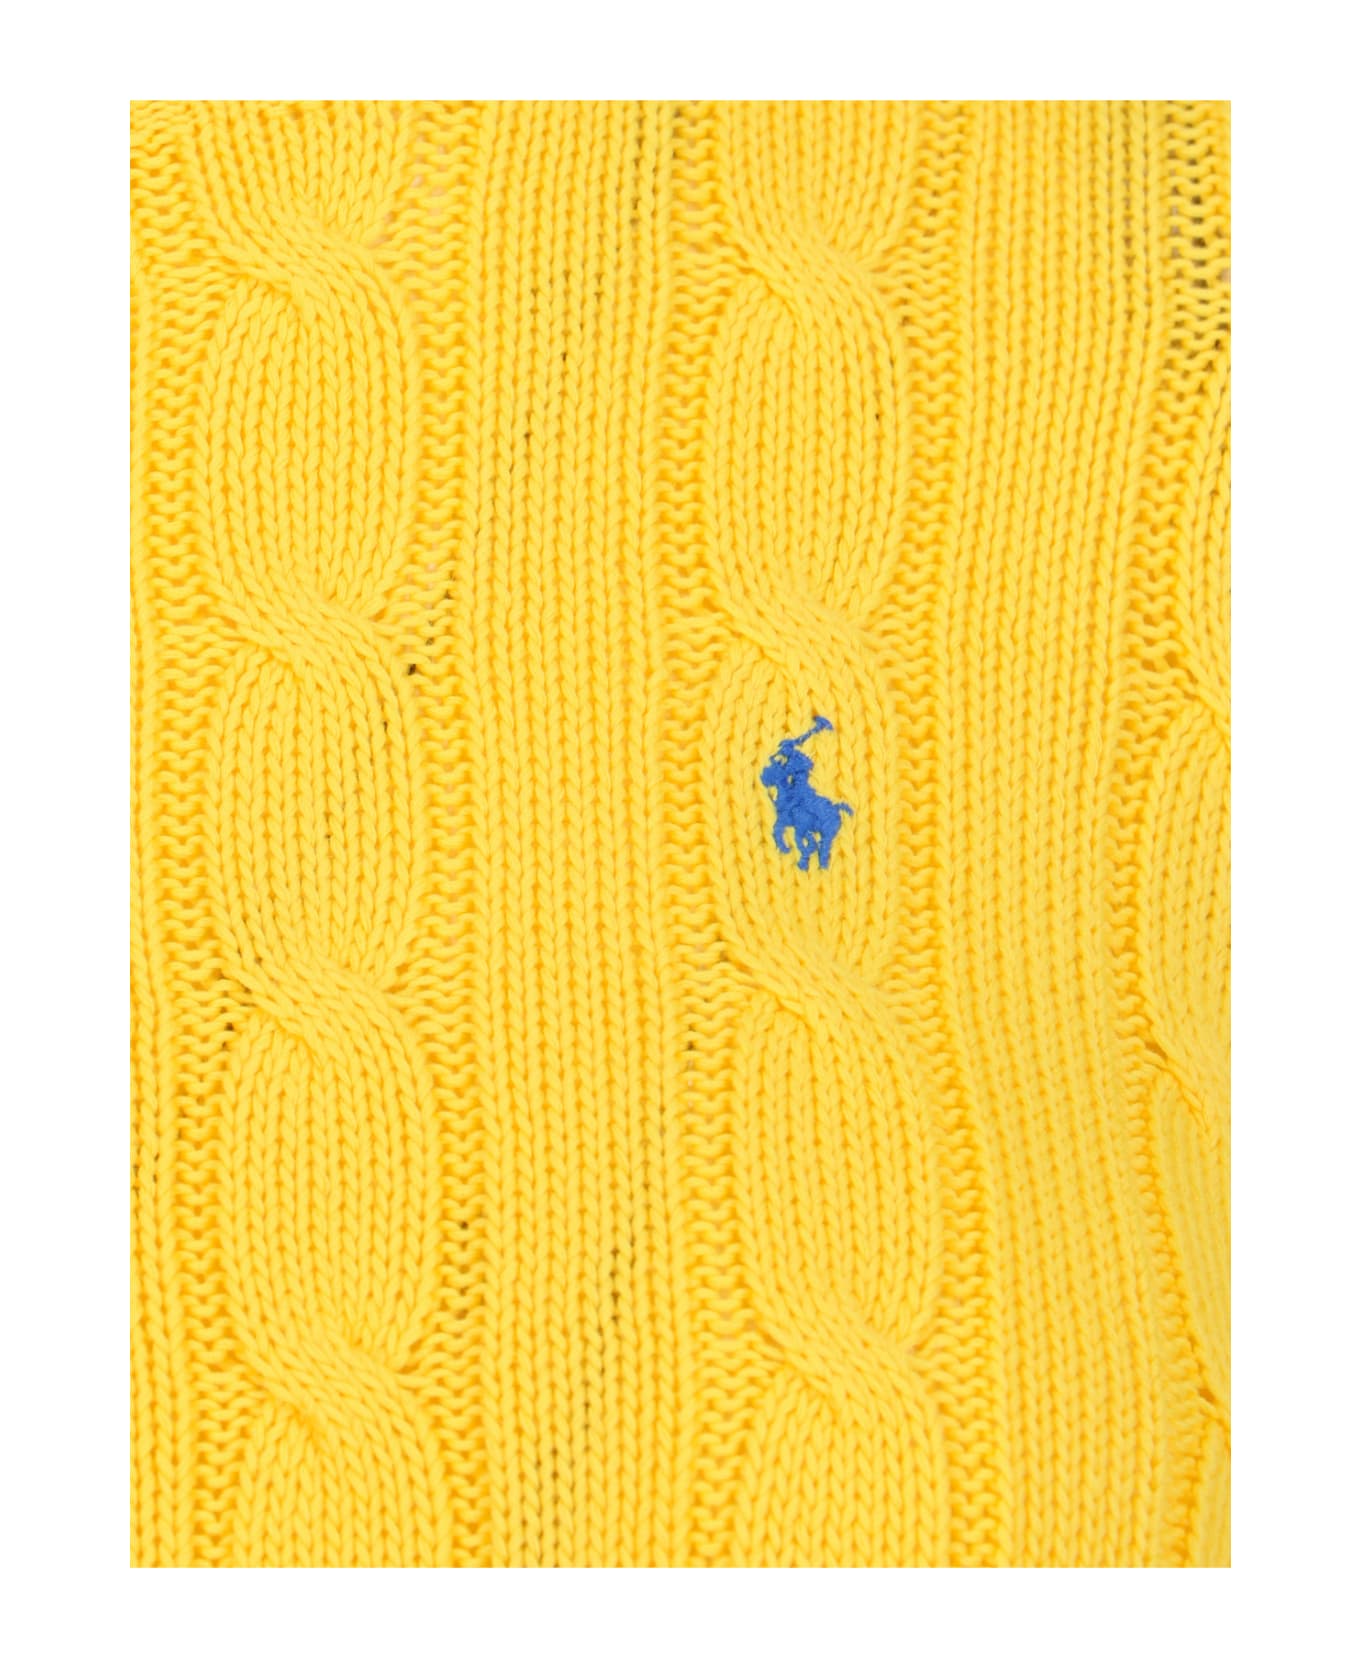 Polo Ralph Lauren Logo Crew Neck Sweater - Yellow